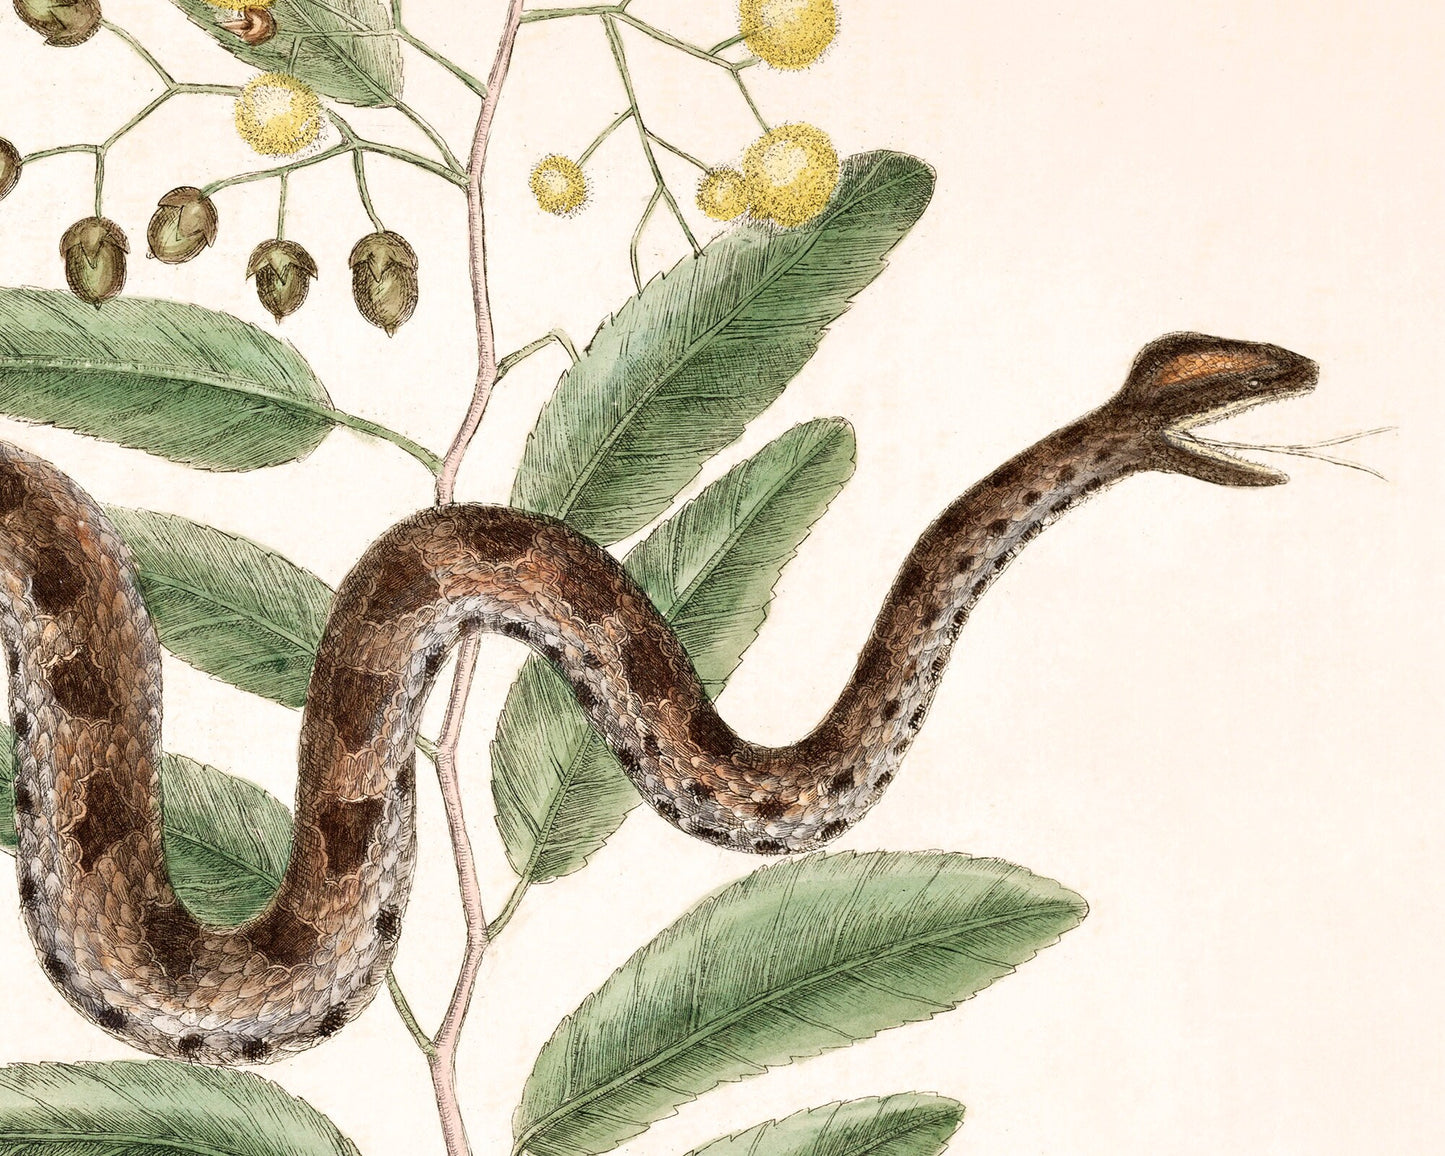 Viper snake and acacia | Antique Mark Catesby | Natural history of Carolina art | Modern vintage décor | Eco-friendly gift